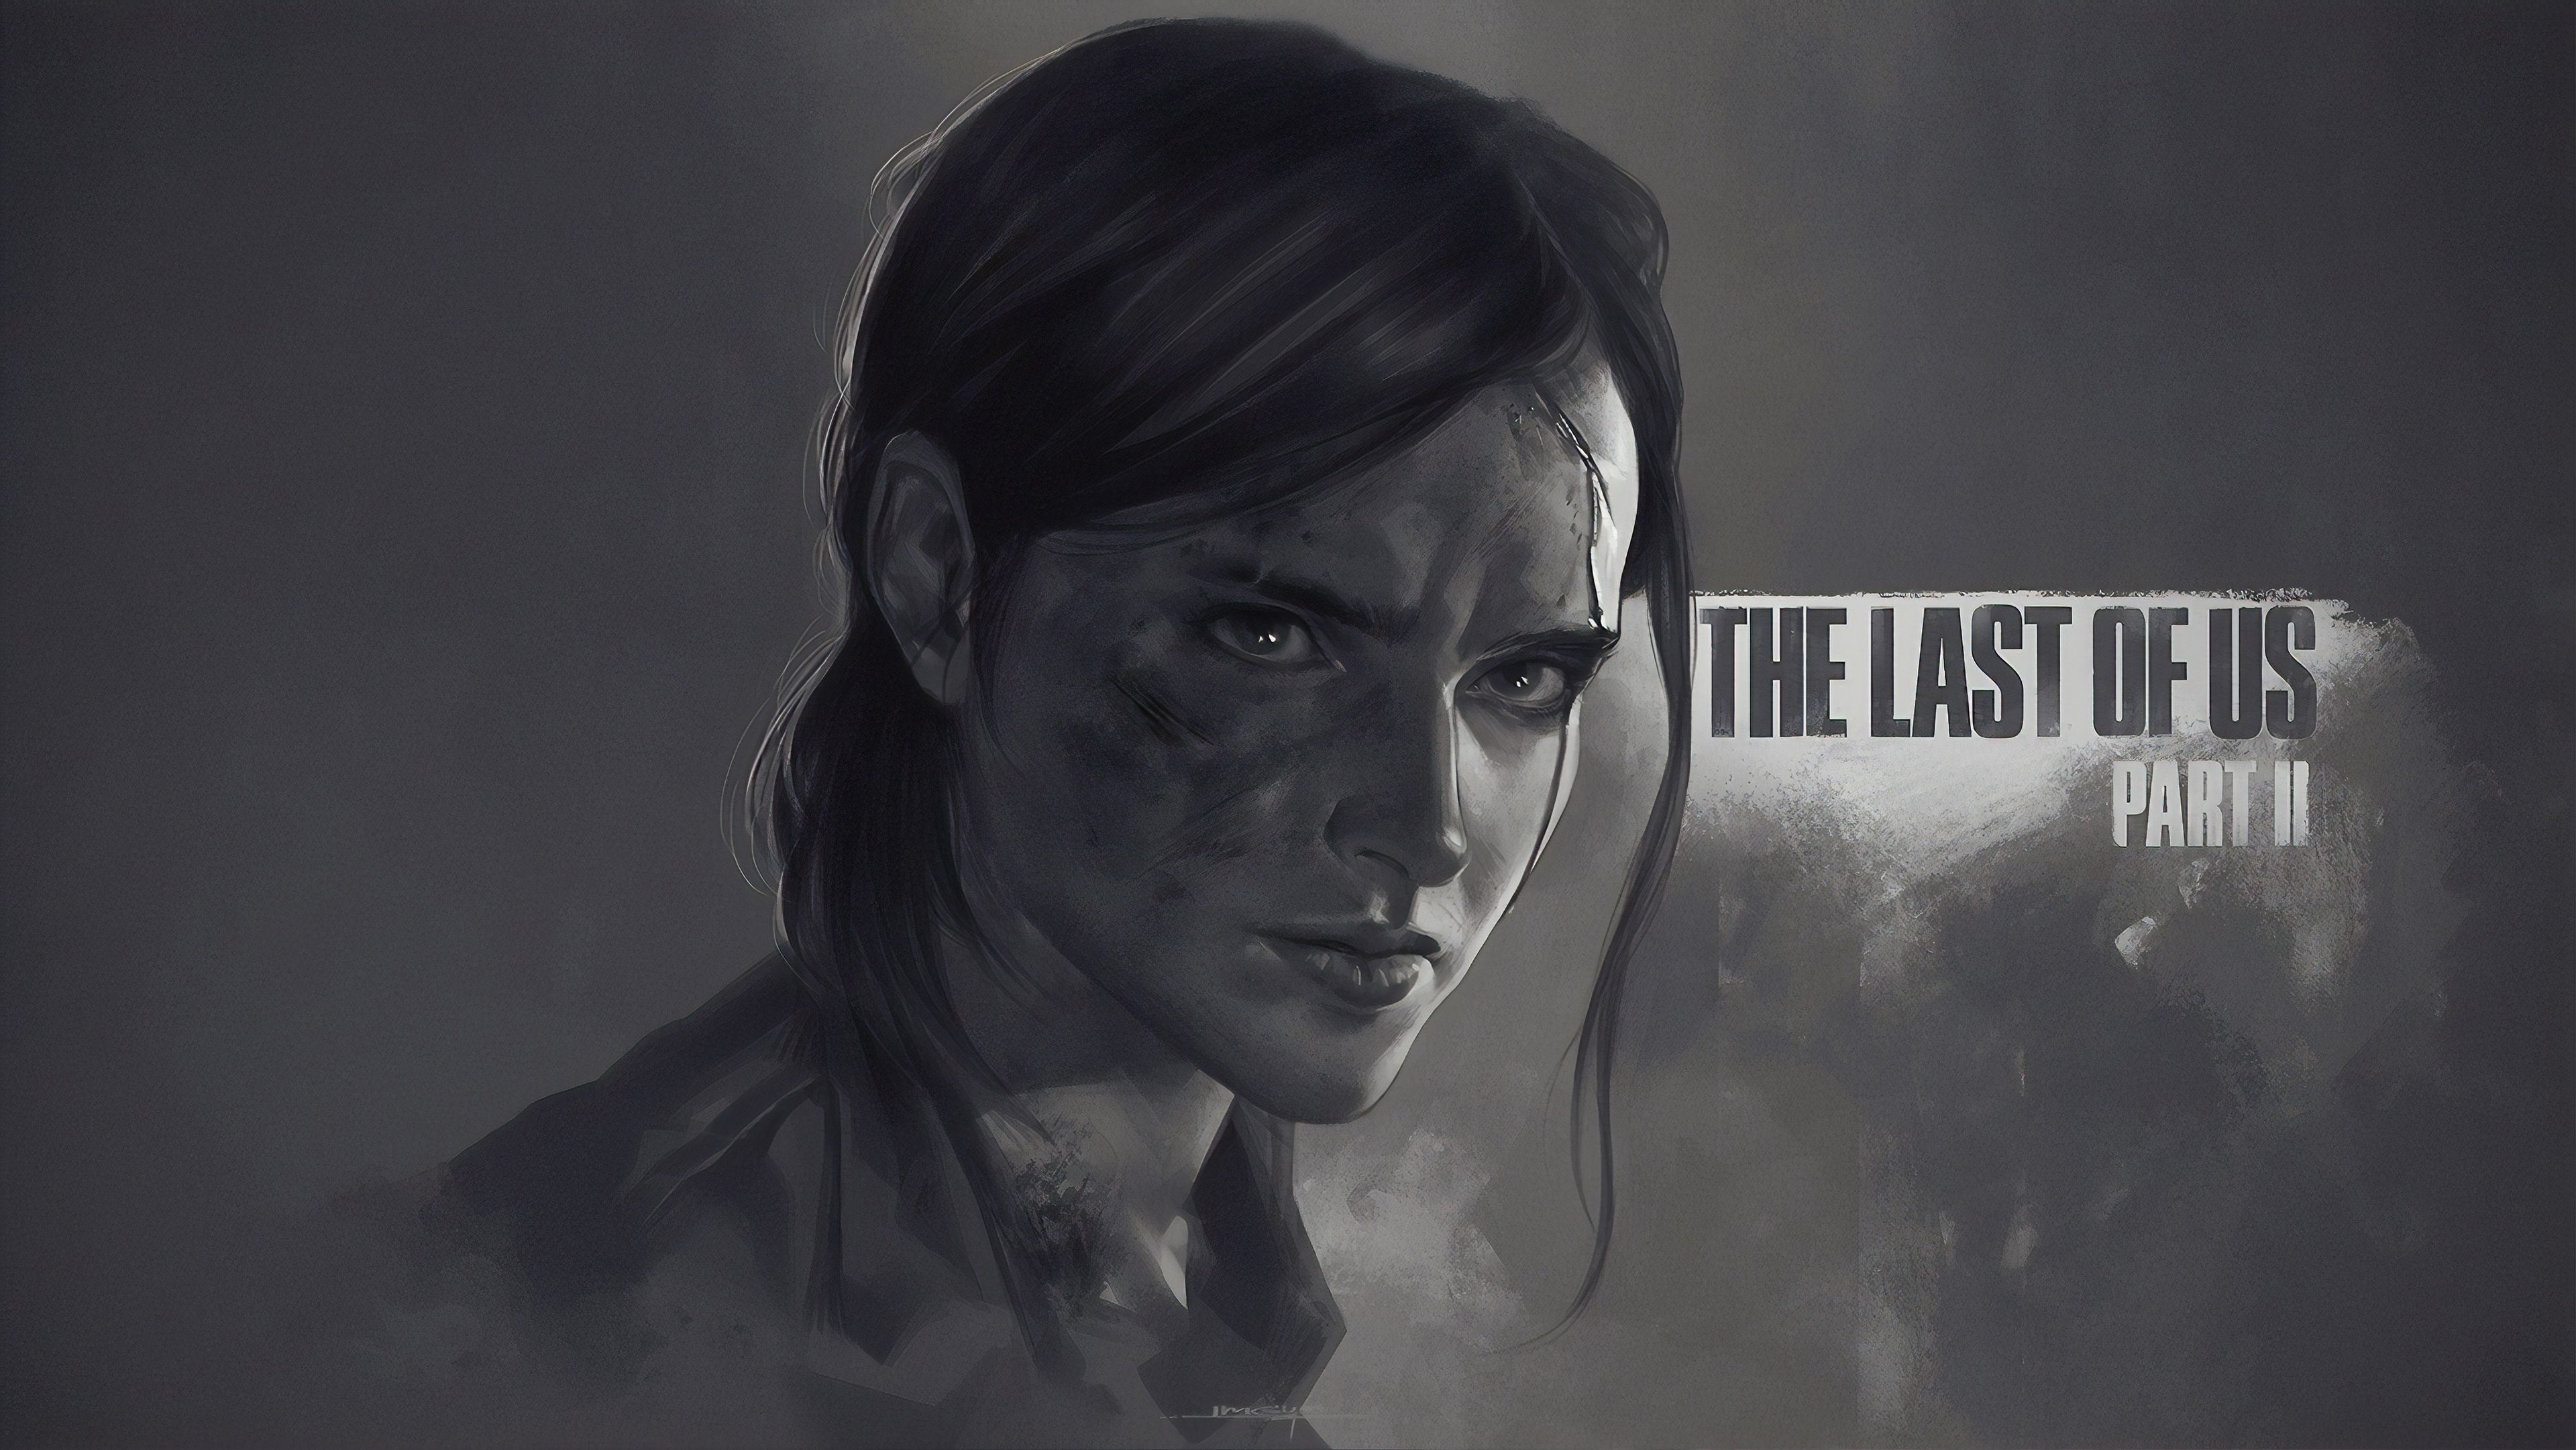 Ellie The Last Of Us Part 2 iPad Air Wallpaper, HD Games